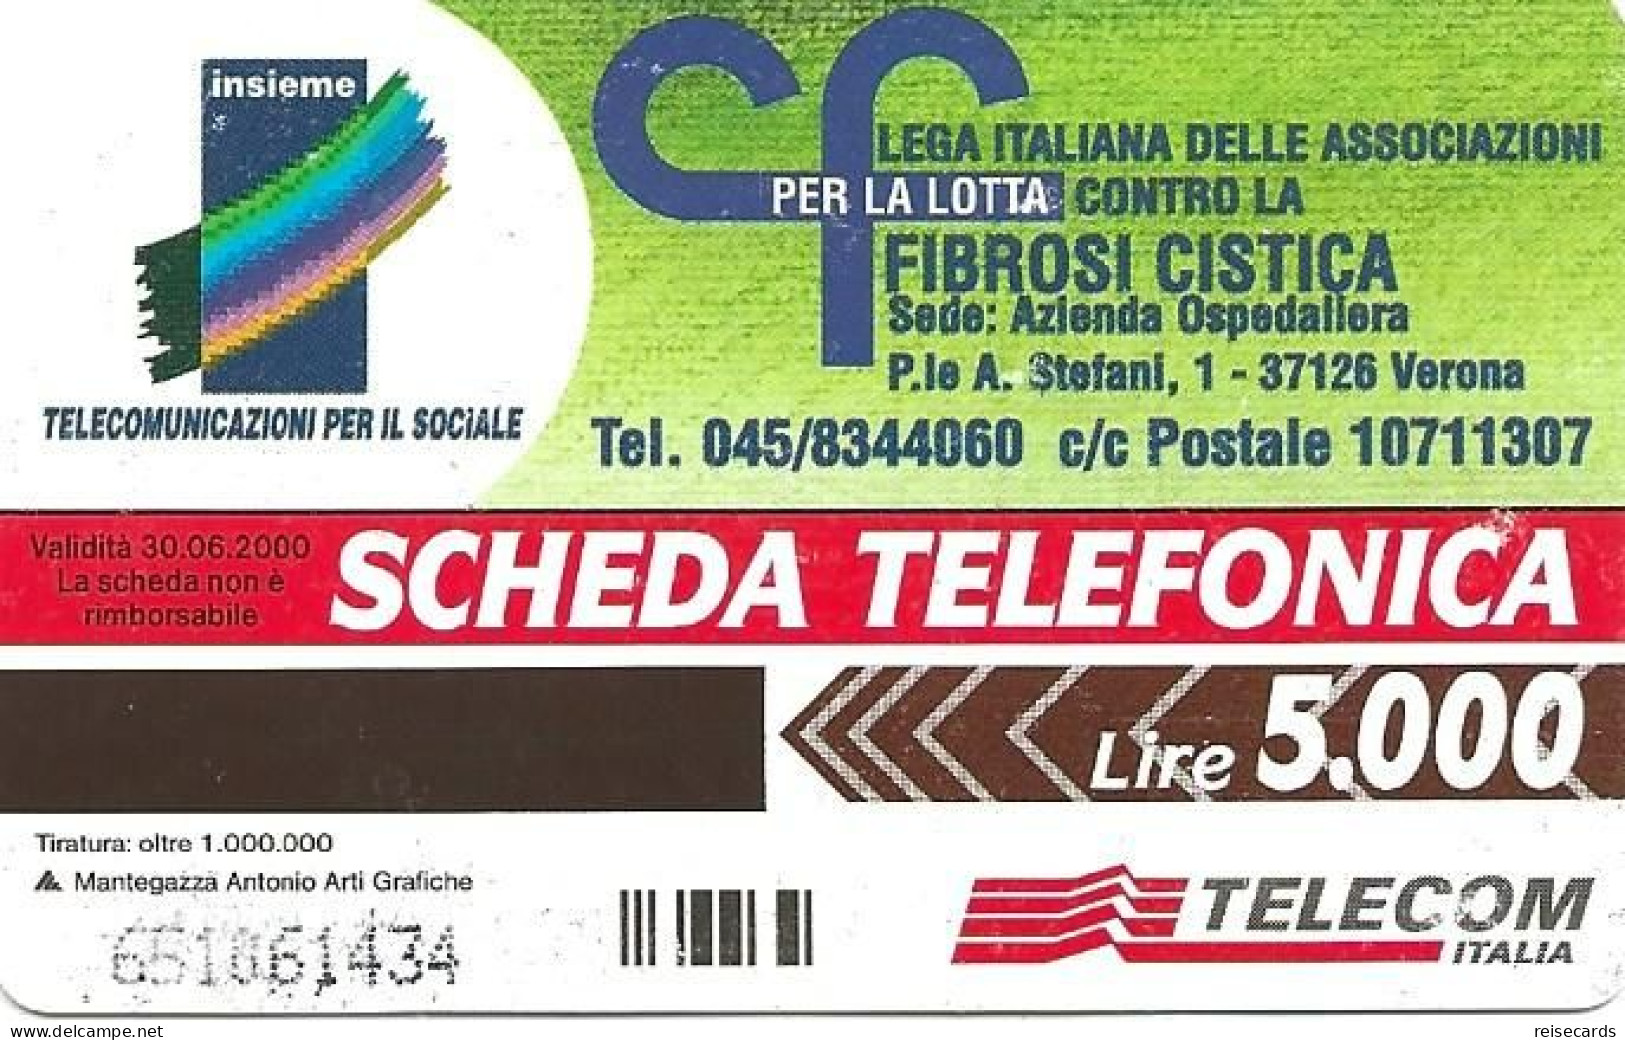 Italy: Telecom Italia - Fibrosi Cistica - Public Advertising